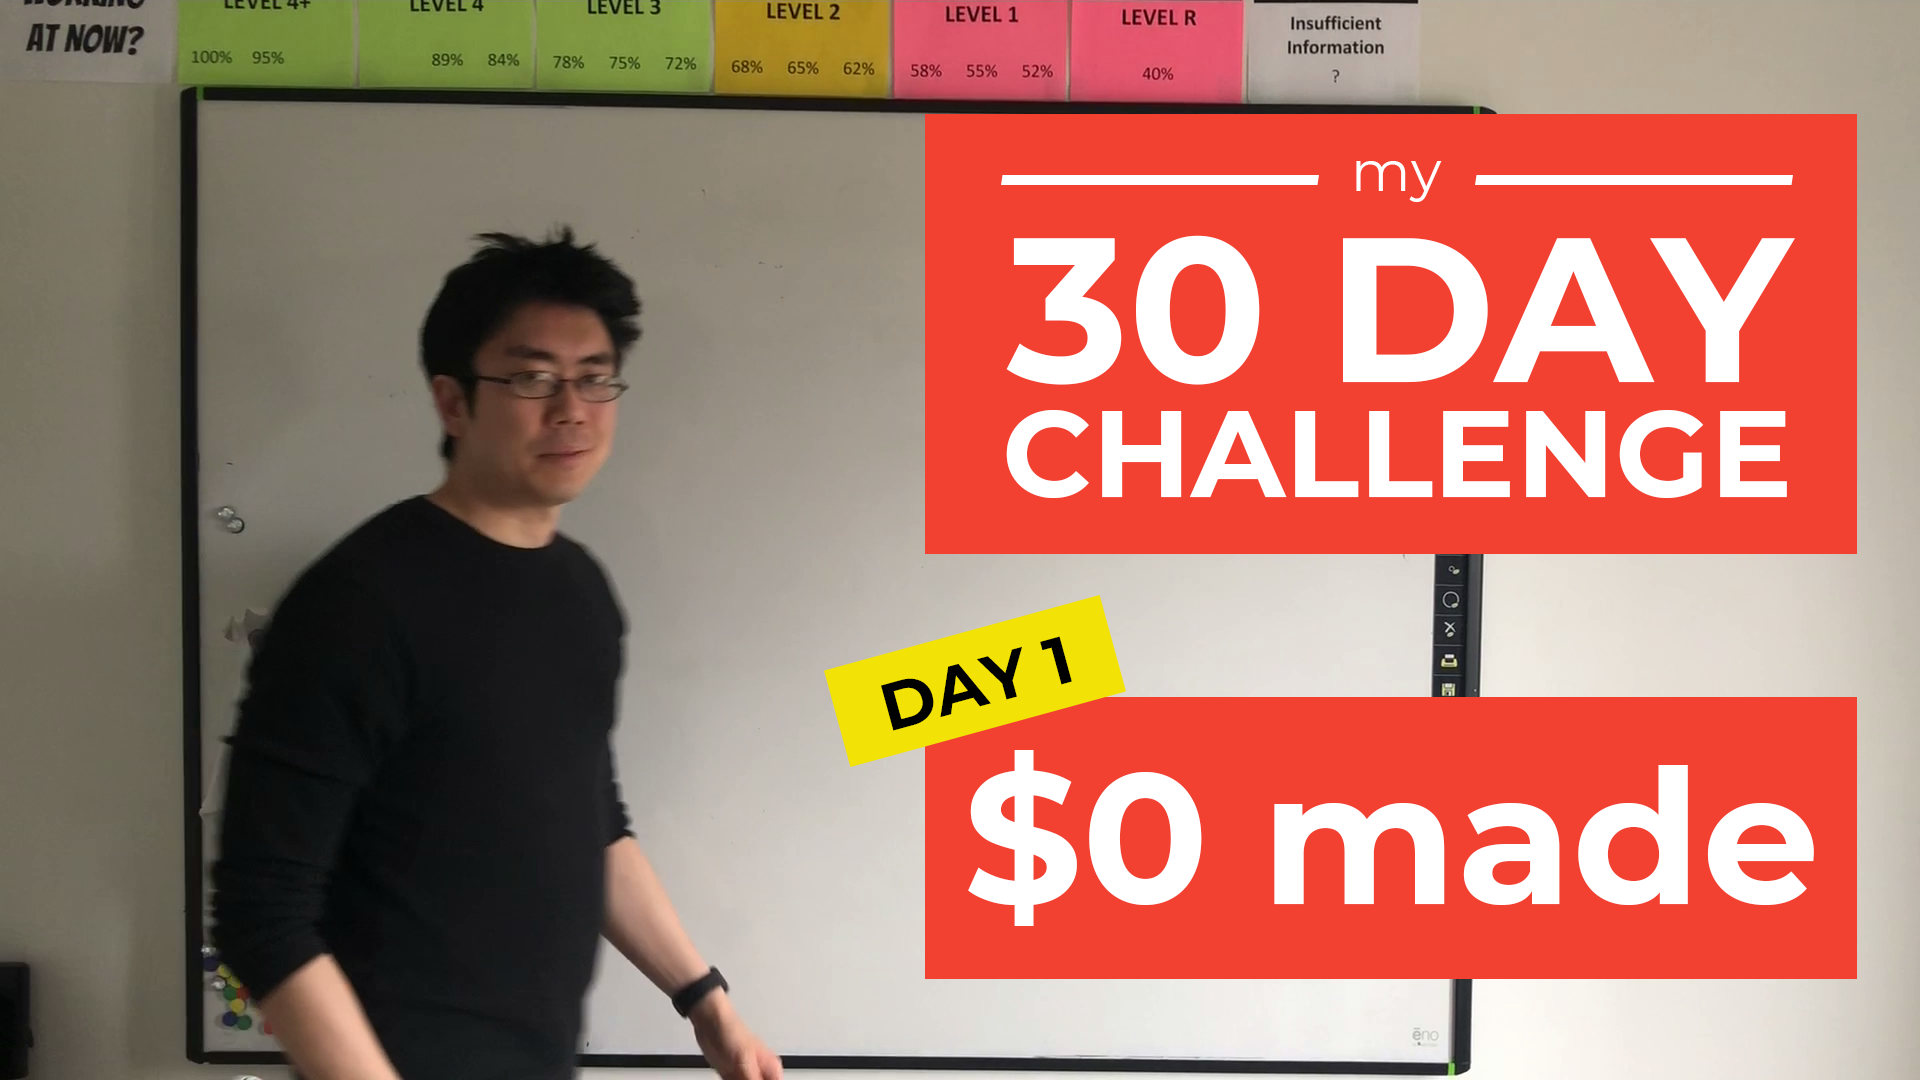 30 Day Challenge to Make Money Online - Day 1: $0 made. Find a friend